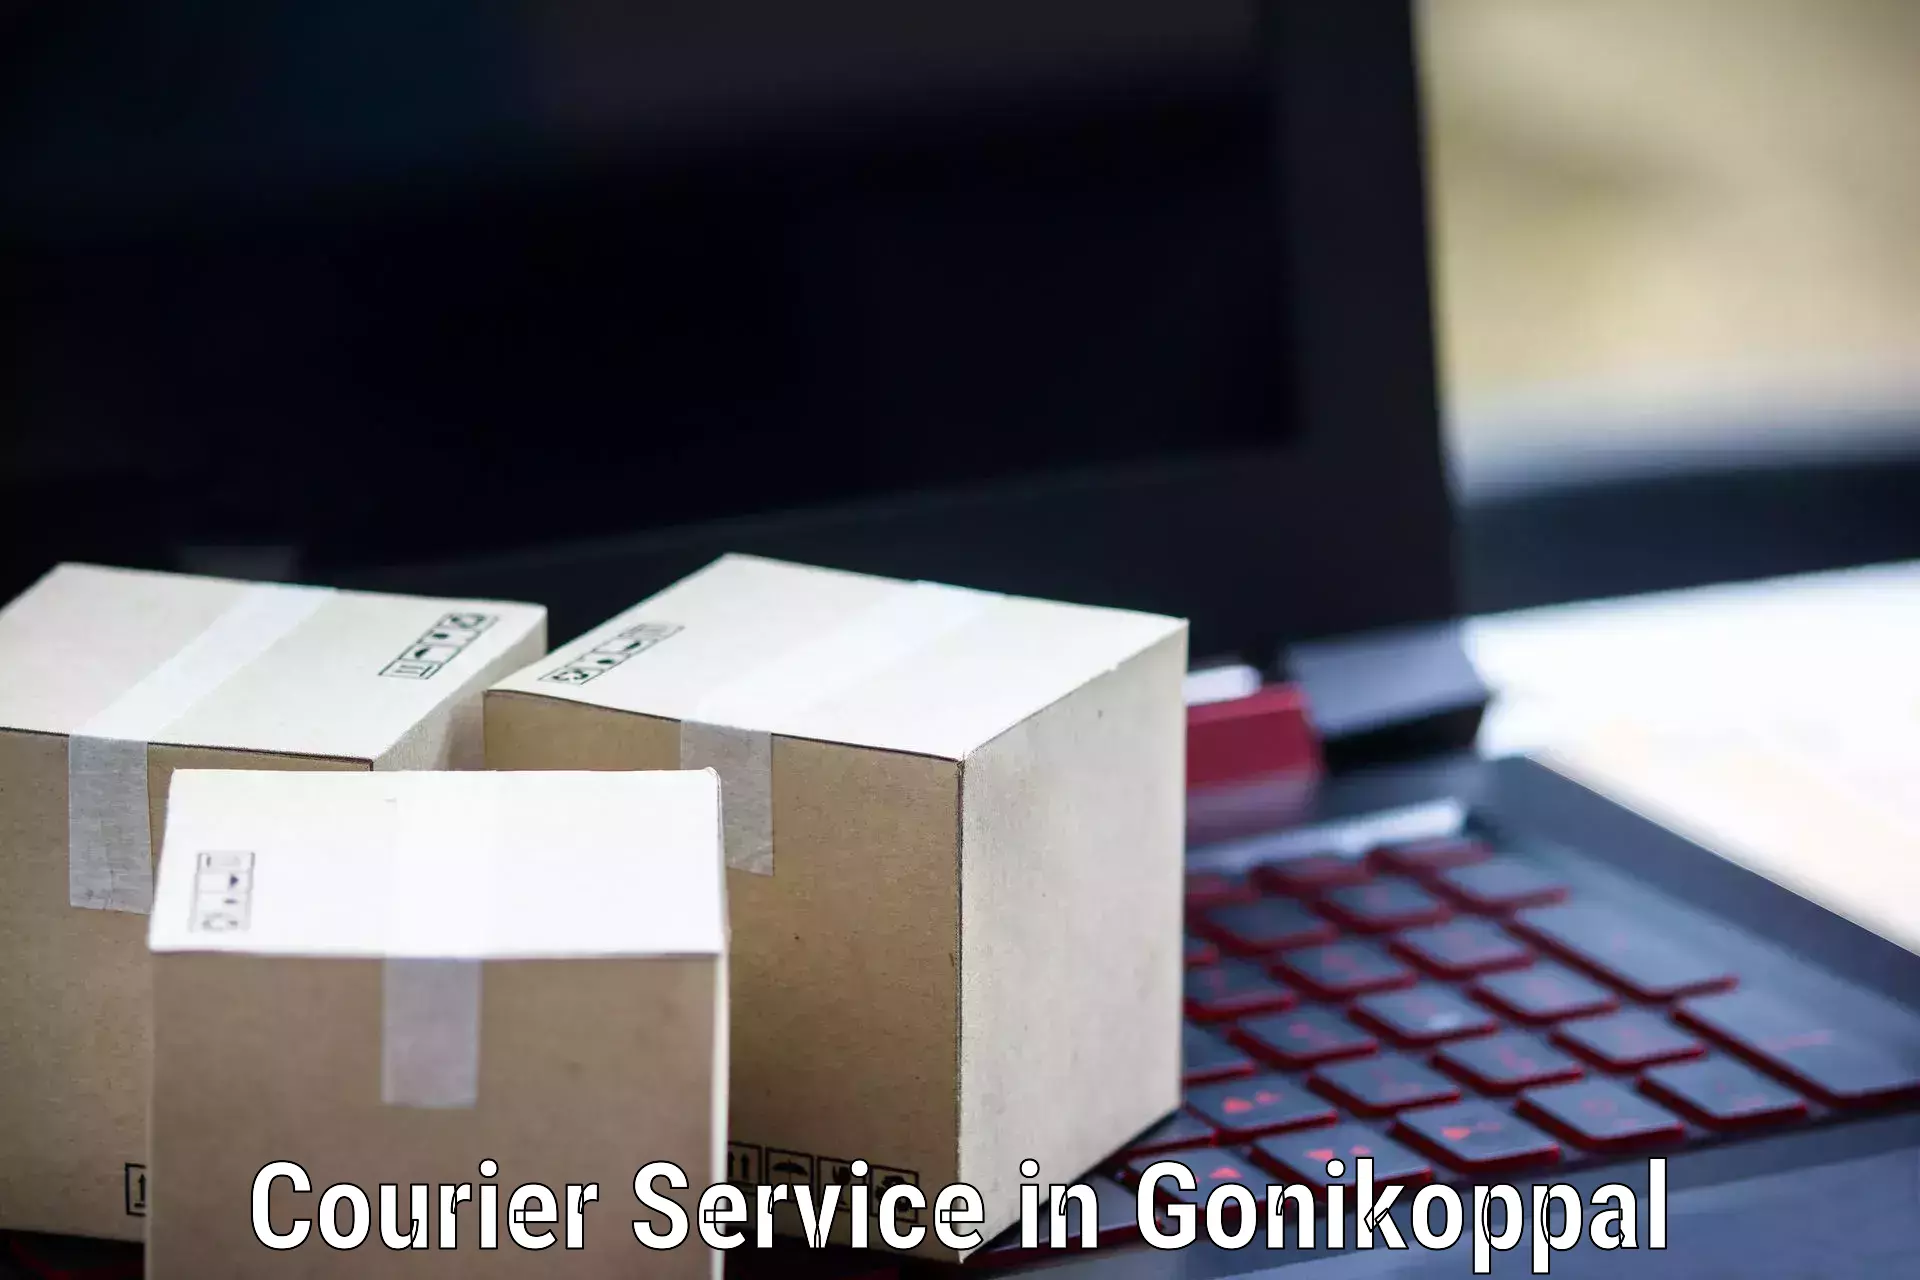 Tech-enabled shipping in Gonikoppal